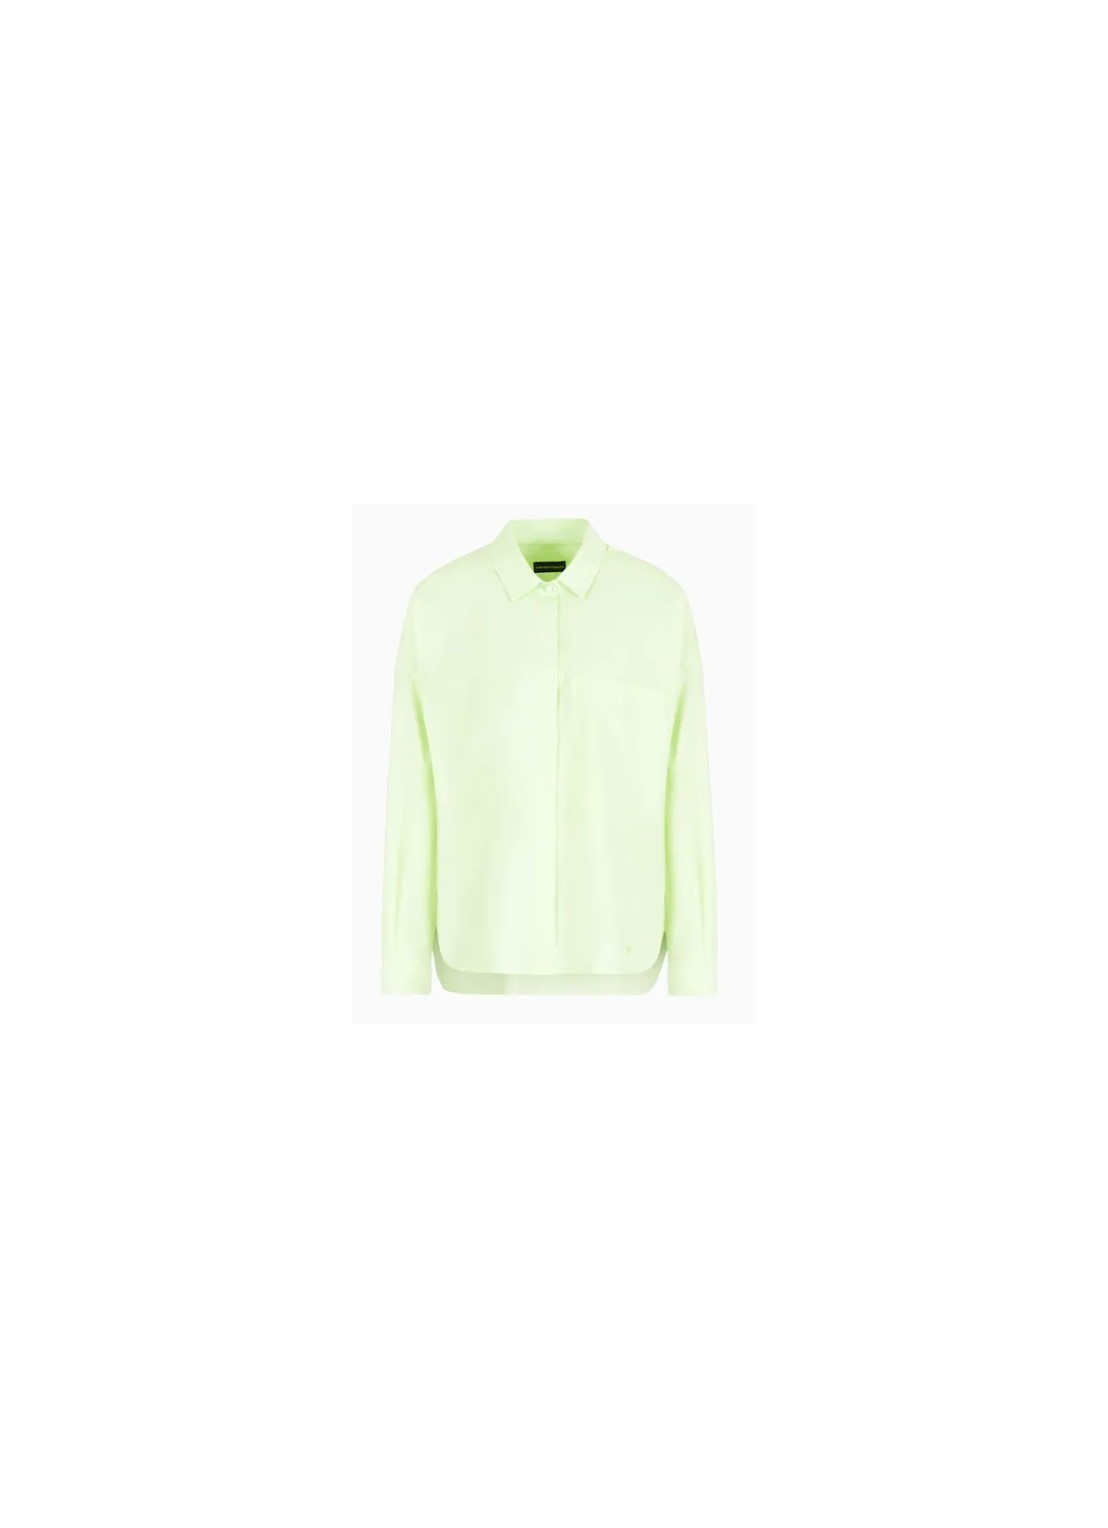 Camiseria emporio armani shirt woman camicia 3d2c642n0fz 0510 talla verde
 